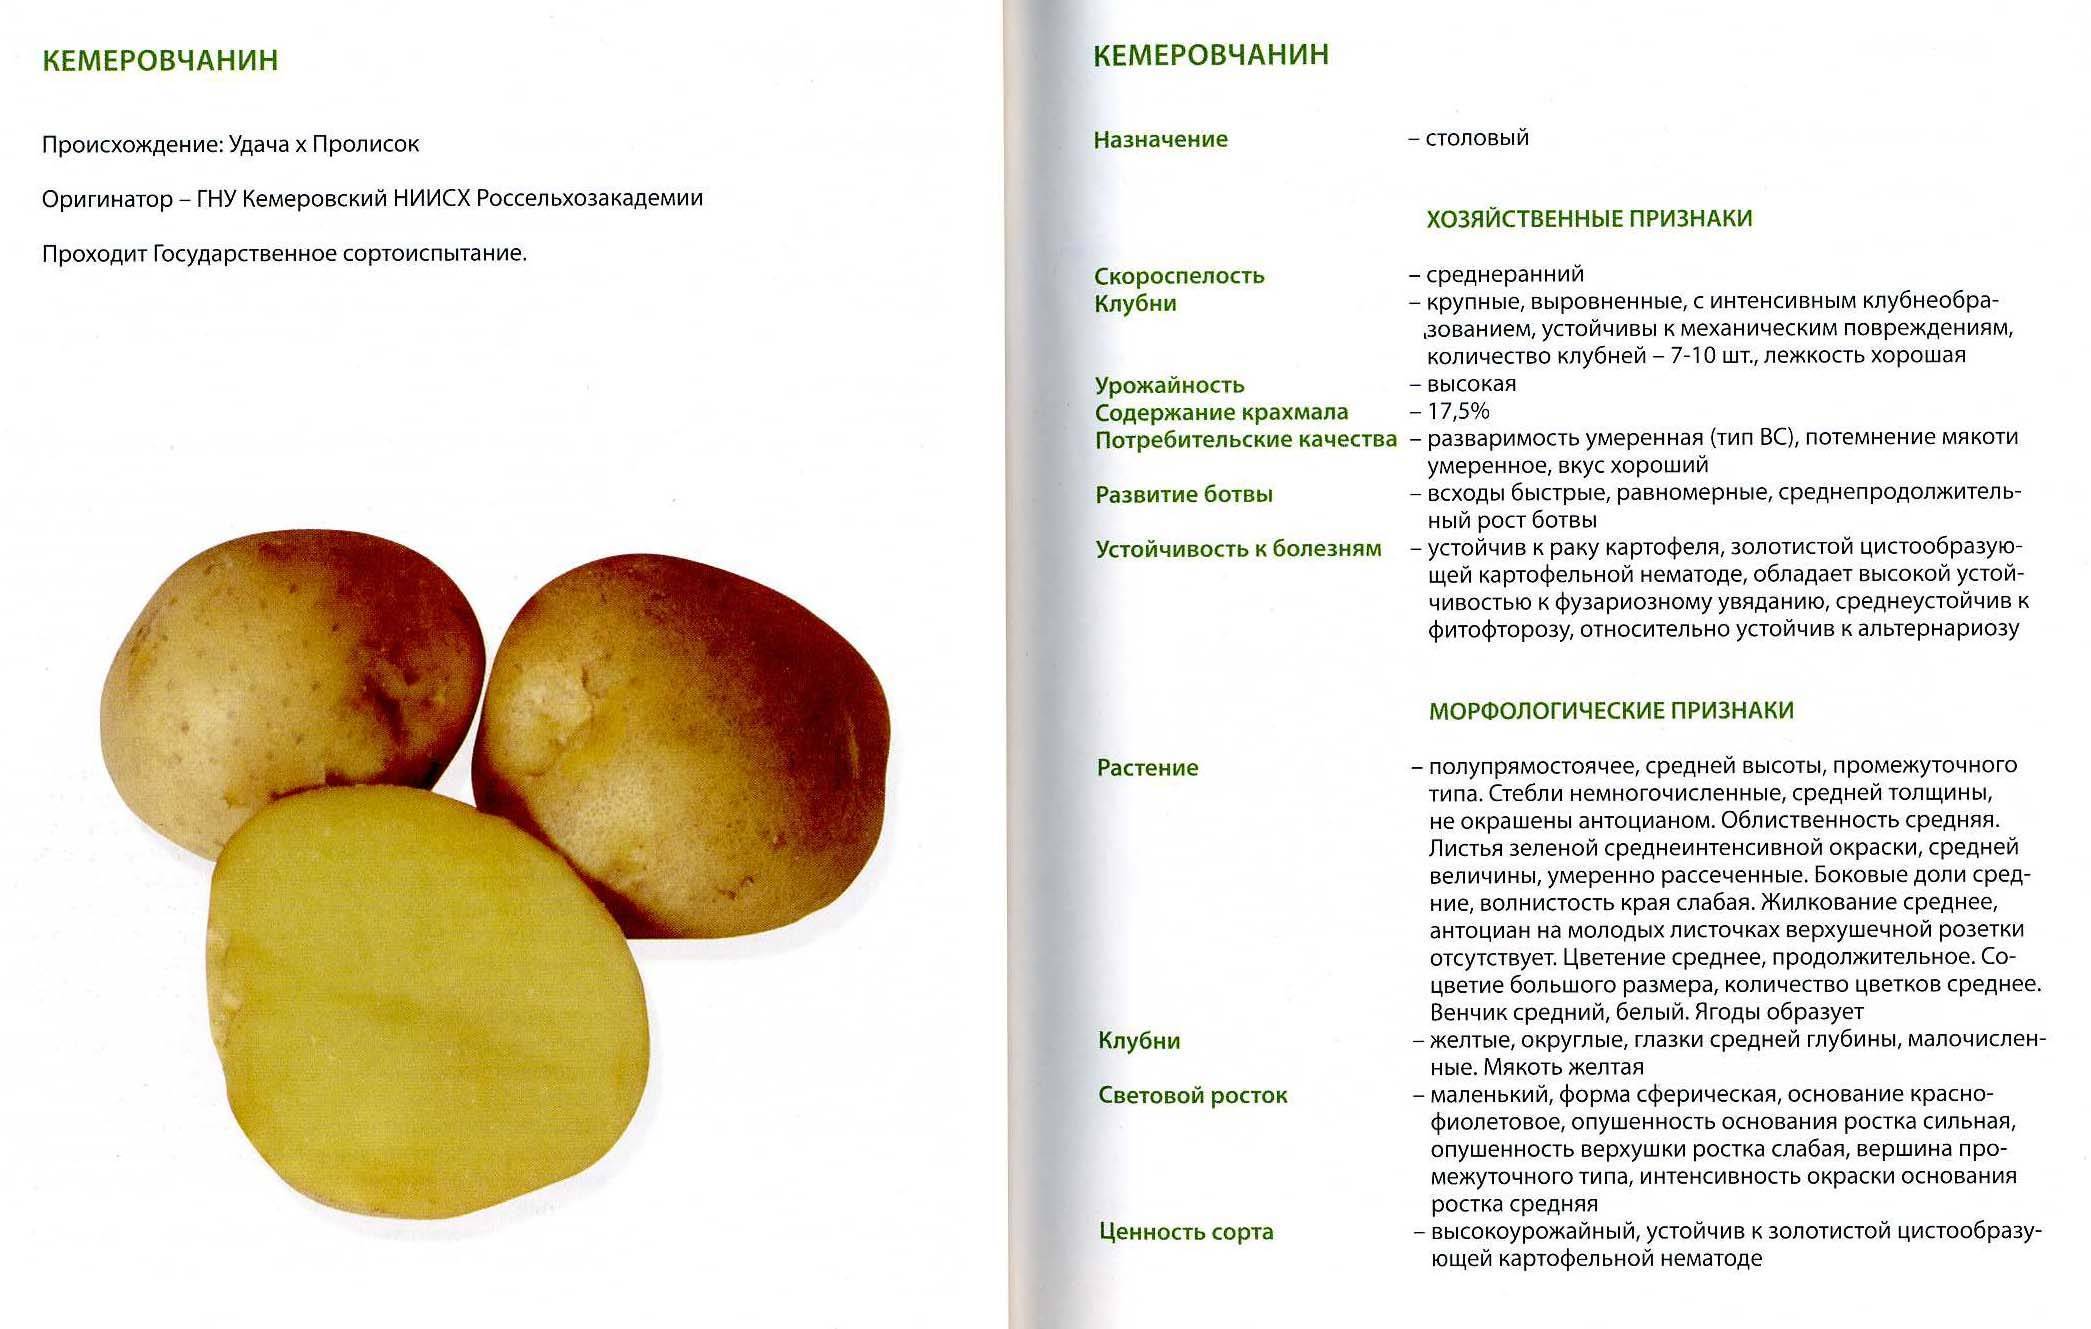 Картофель зорачка: описание и характеристика сорта, агротехника посадки и ухода